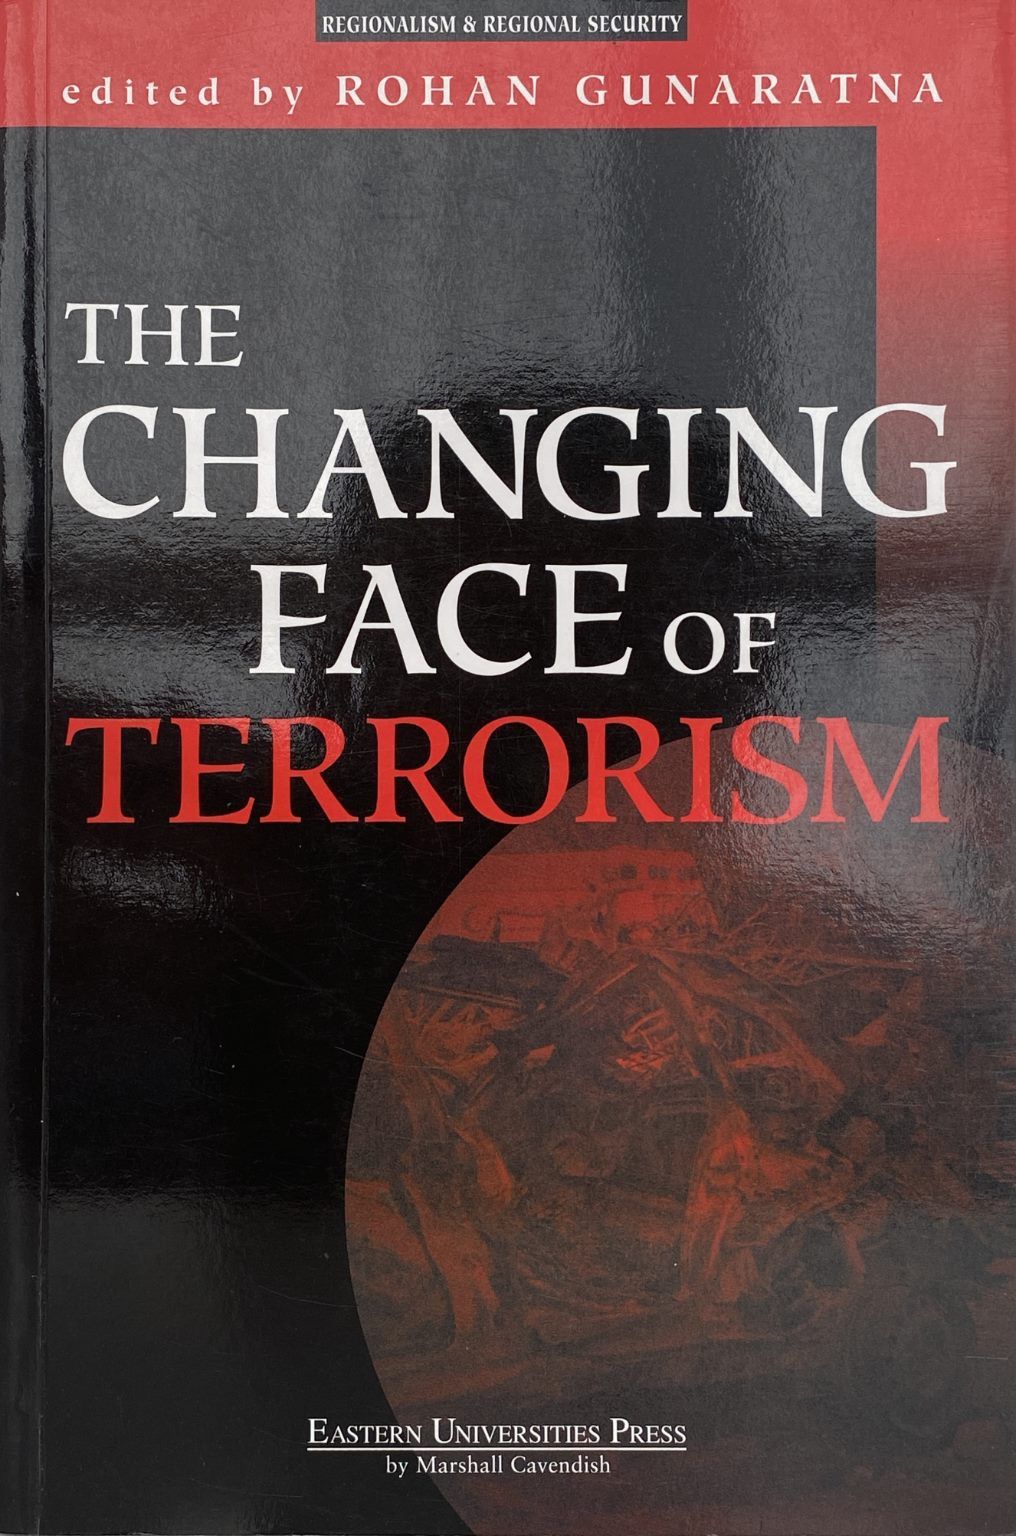 THE CHANGING FACE OF TERRORISIM